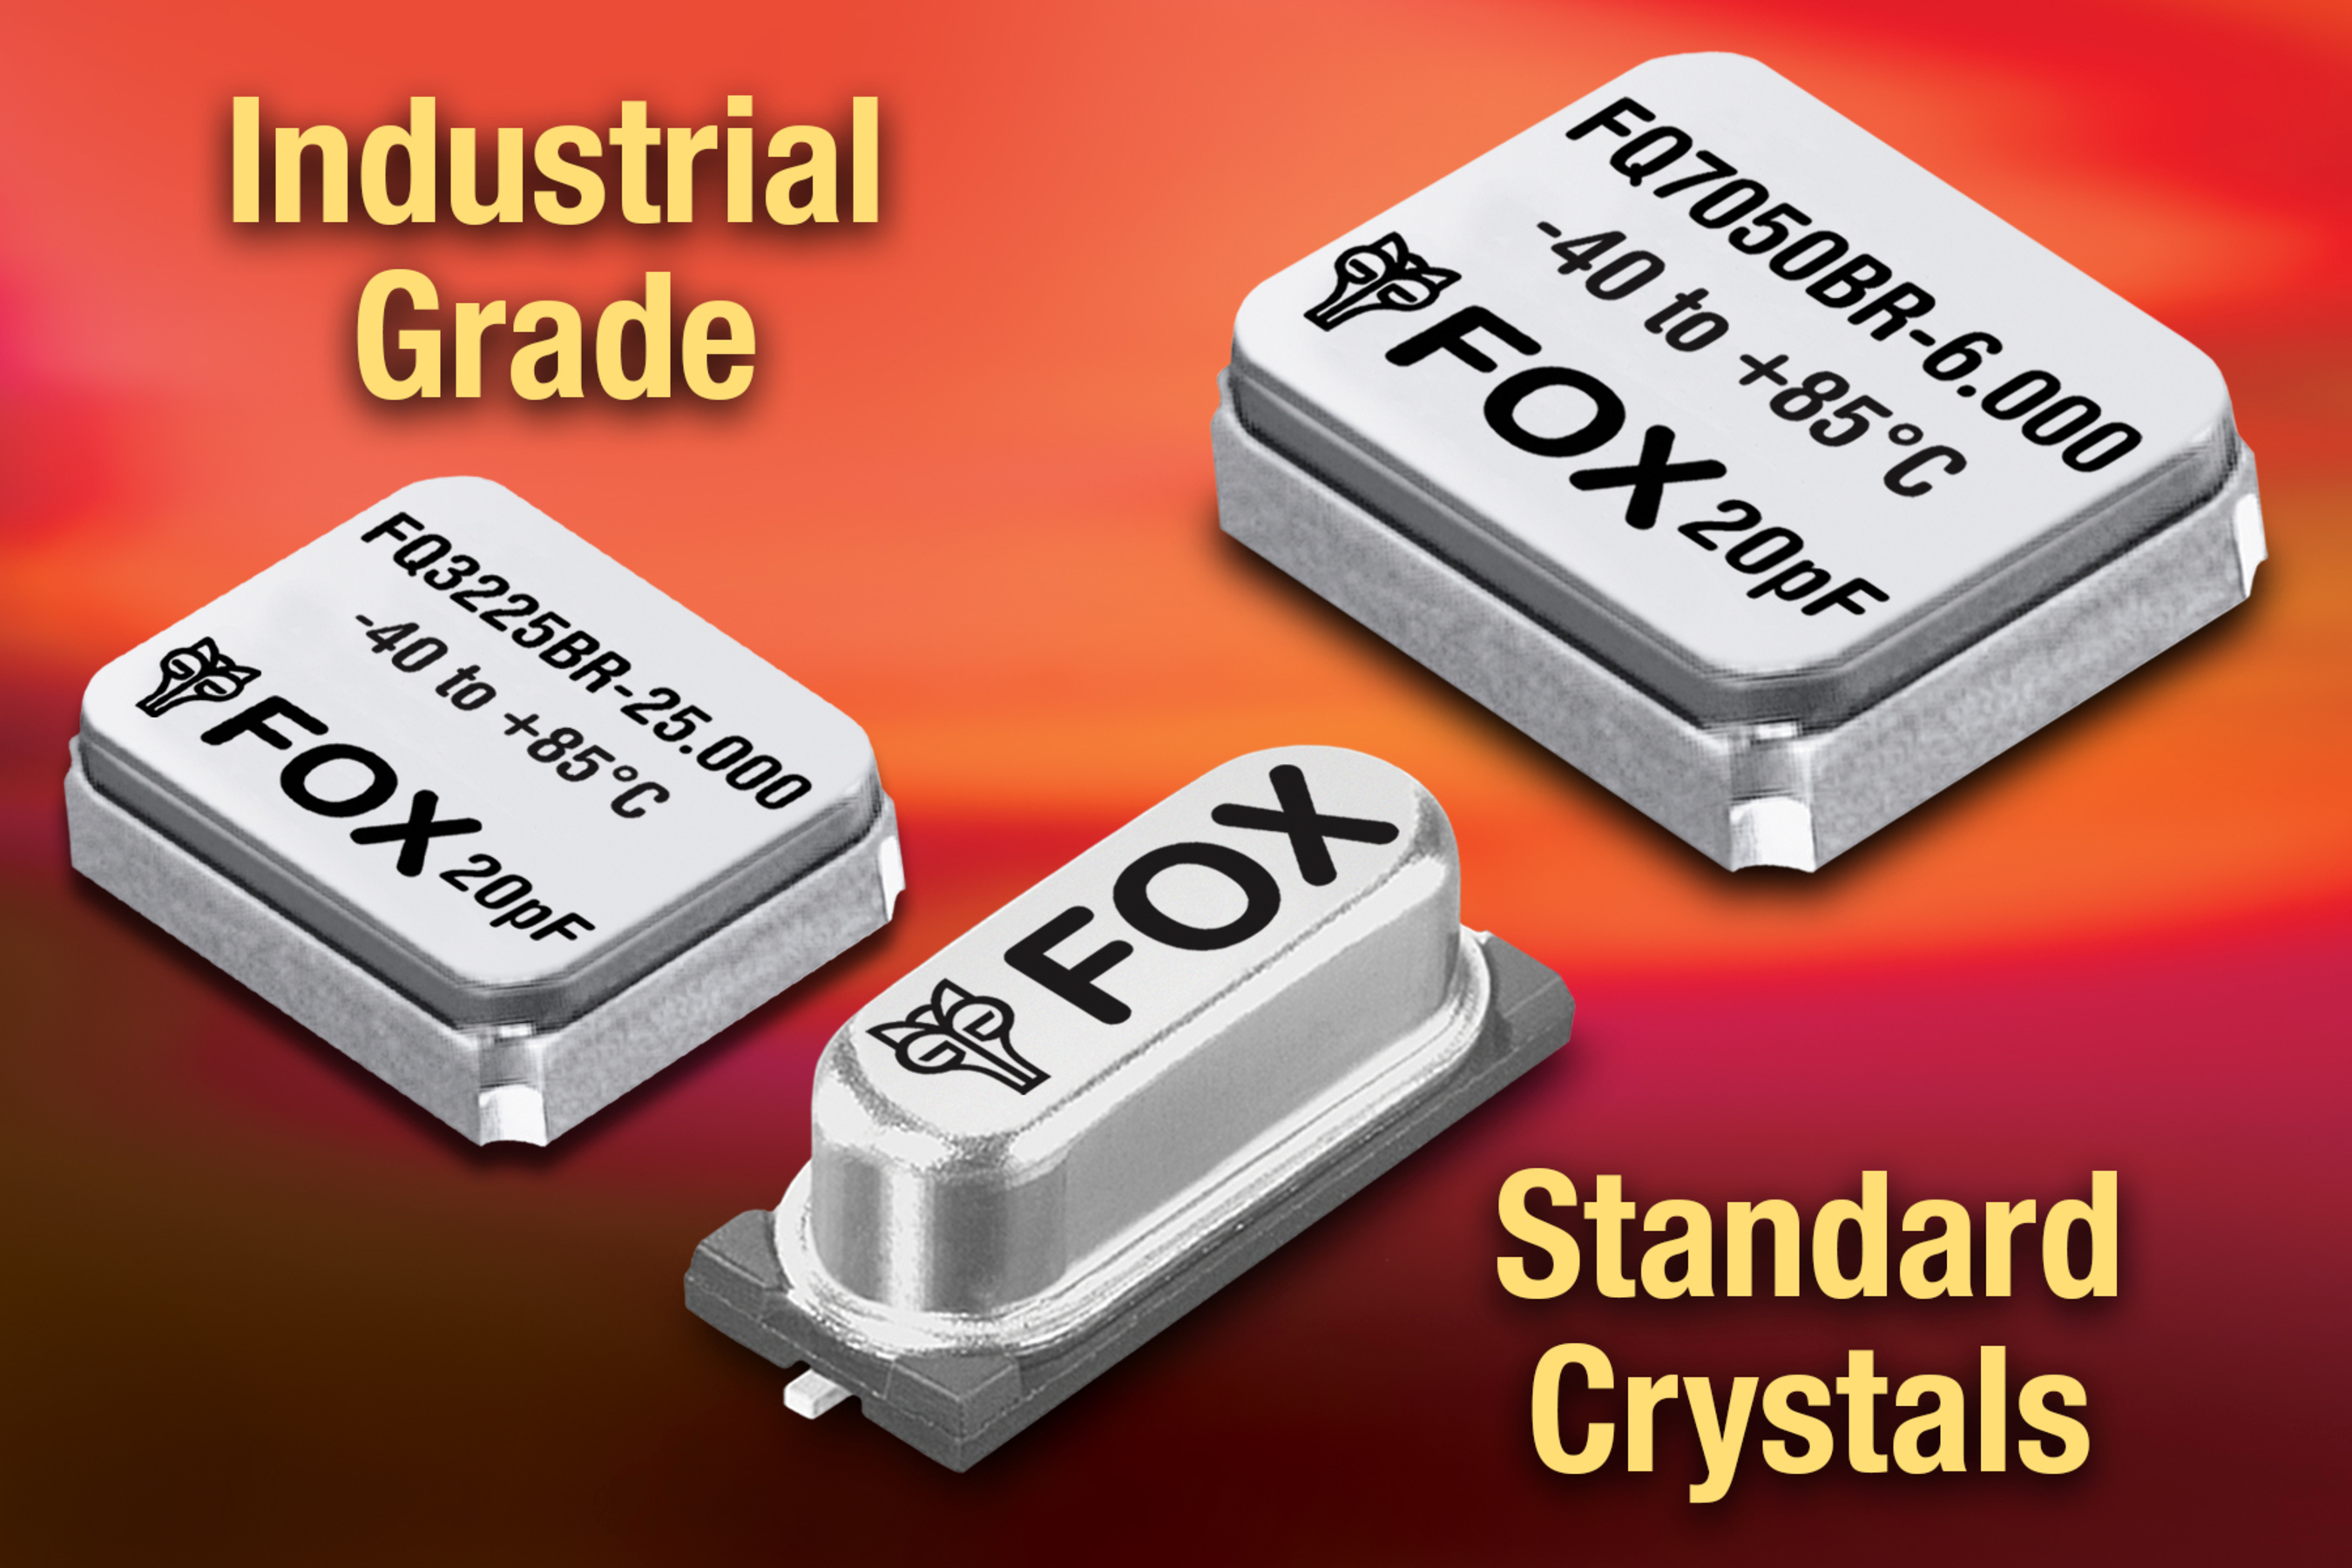 Popular Industrial Grade Crystals from Fox Now Stocked as Standard (PRNewsFoto/Fox Electronics)